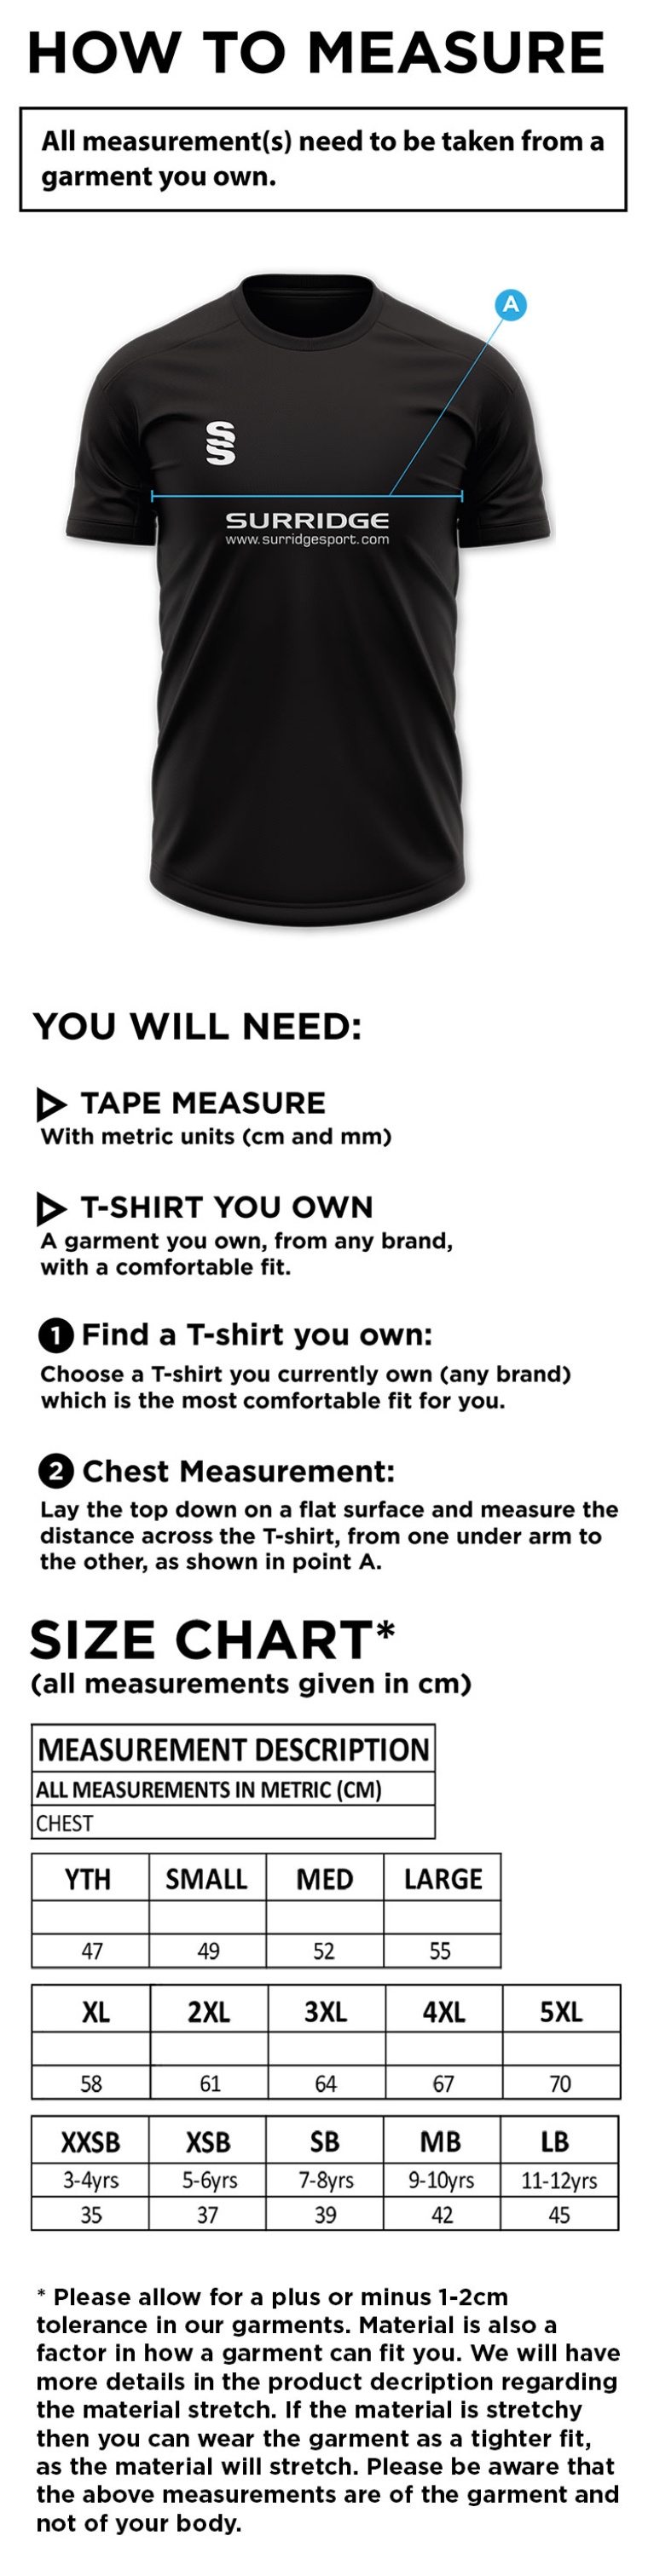 Blade Polo Shirt : Navy / White - Size Guide